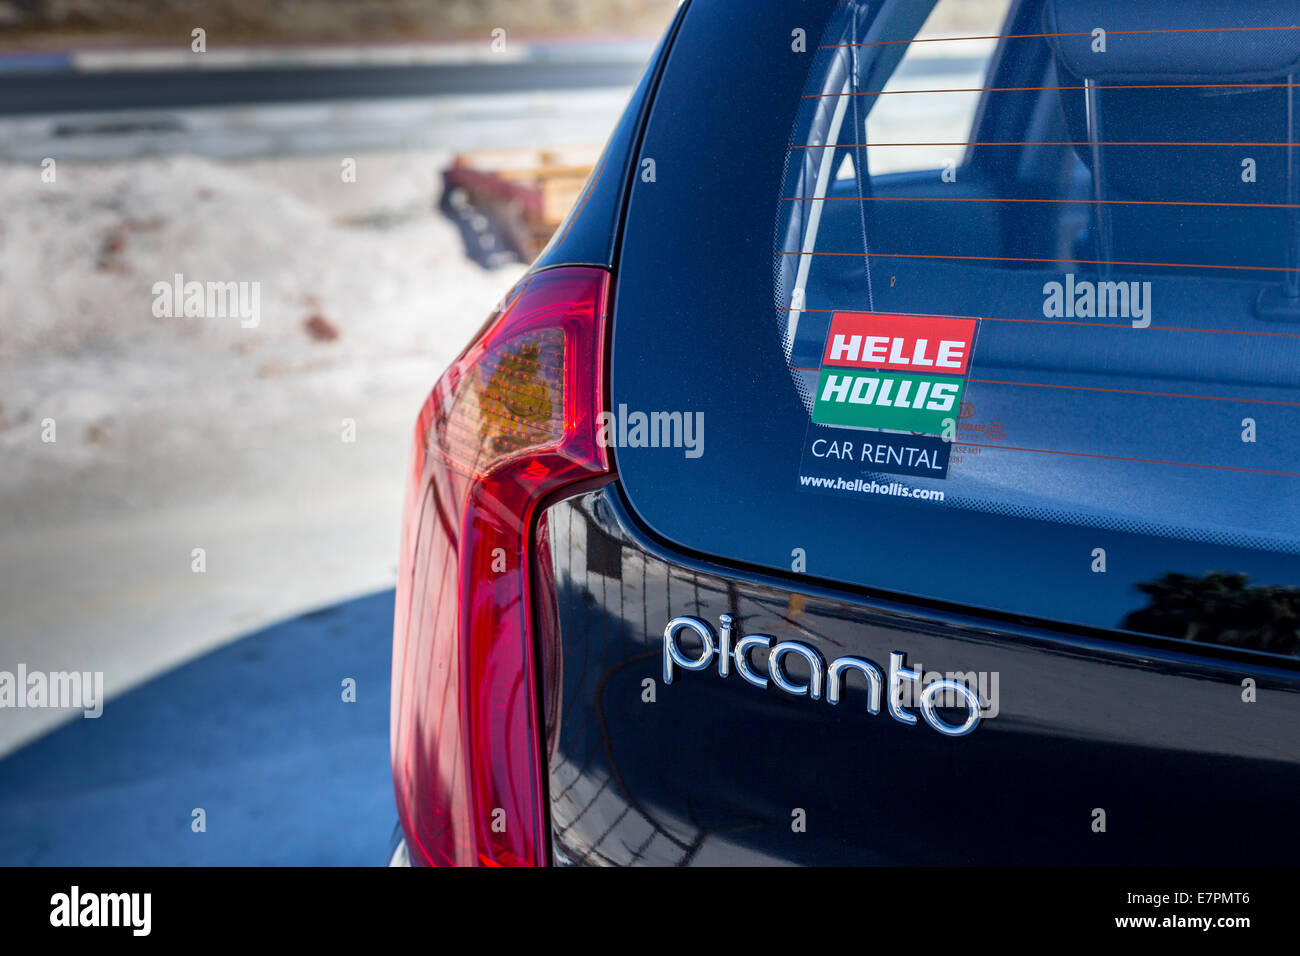 A Kia Picanto rental car. Rented by Helle Hollis car hire in Malaga, Costa Del Sol Stock Photo